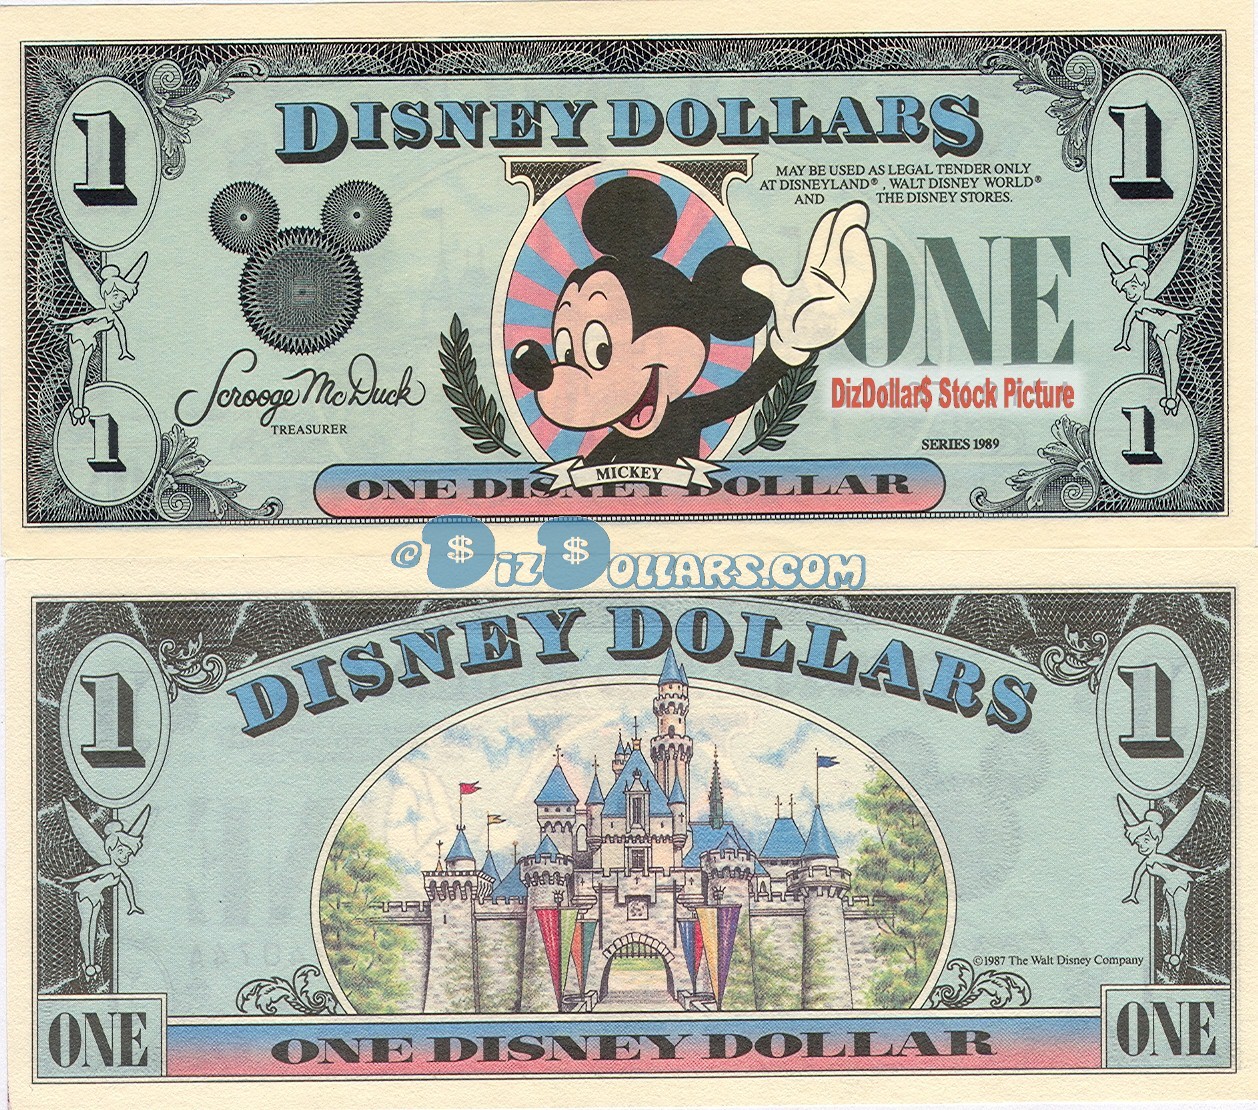 1989 "A" $1 UNC 5 DIGIT S/N Disney Dollar - Waving Mickey front with Sleeping Beauty's Castle Disneyland on back - 1989 Series from Disneyland ~ © DIZDUDE.com